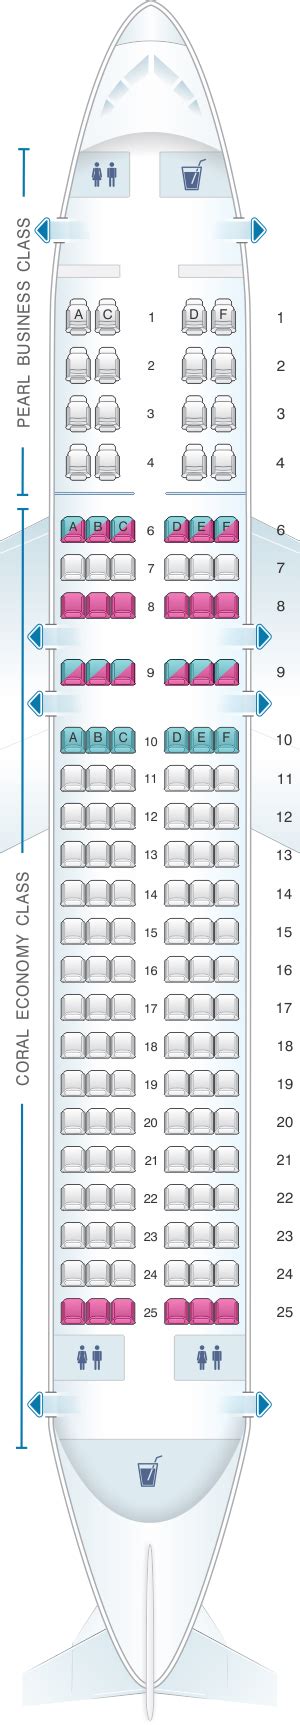 Plan De Cabine Etihad Airways Airbus A320 200 Seatmaestrofr